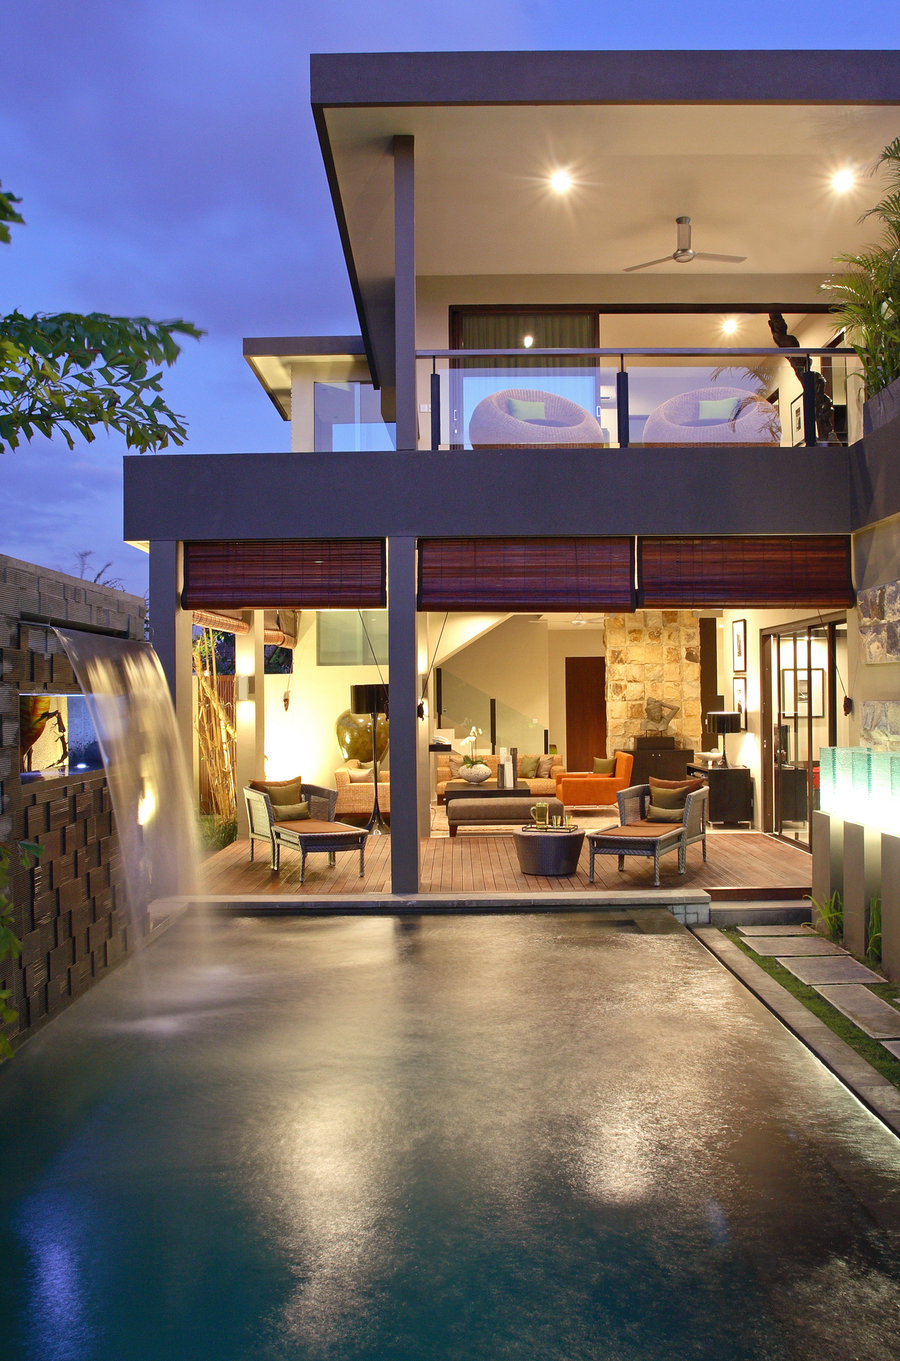 Bali Agung Property: Download Kumpulan Desain Tropical Villa